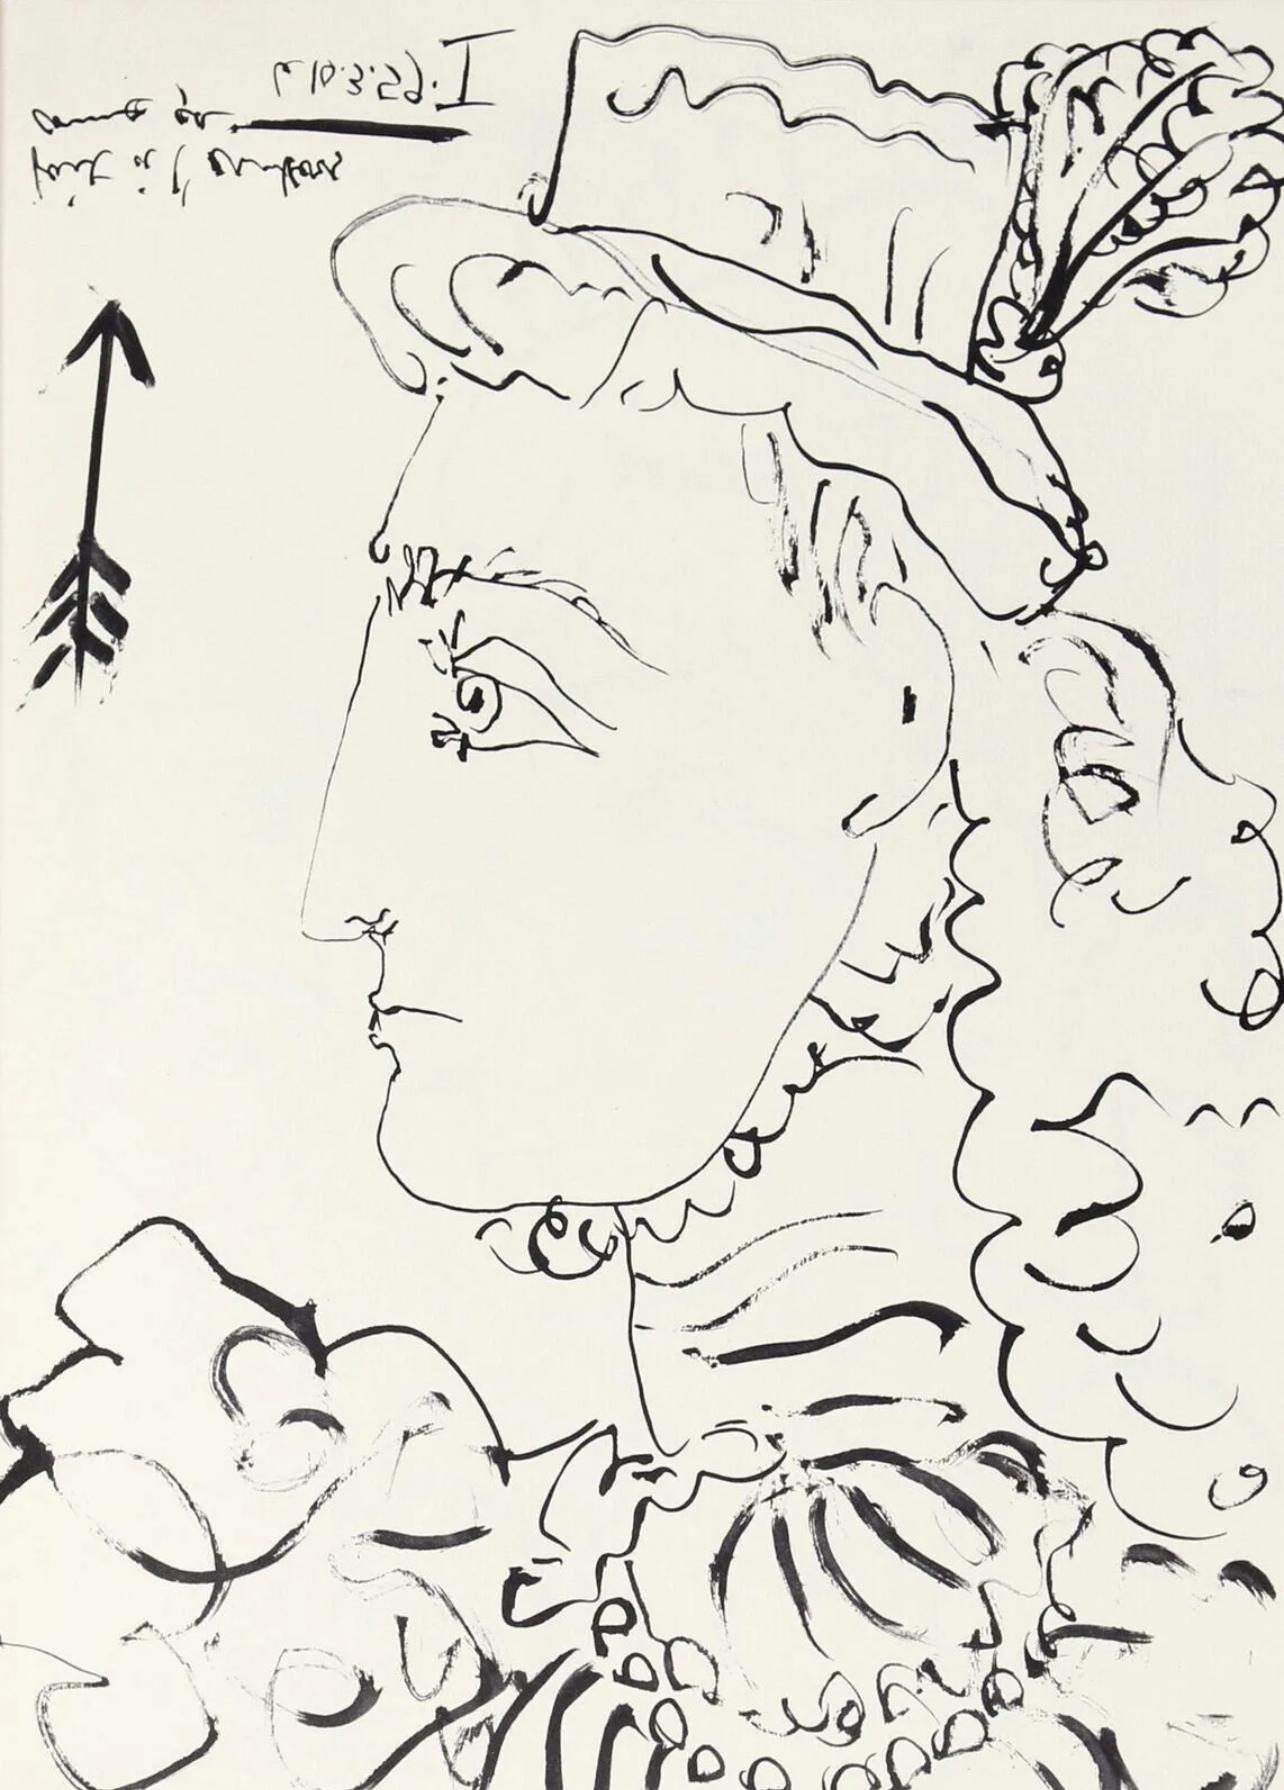 Picasso, Toros Y Toreros (G&C 112; Bloch 1014-1017; Freitag 7495) (after)